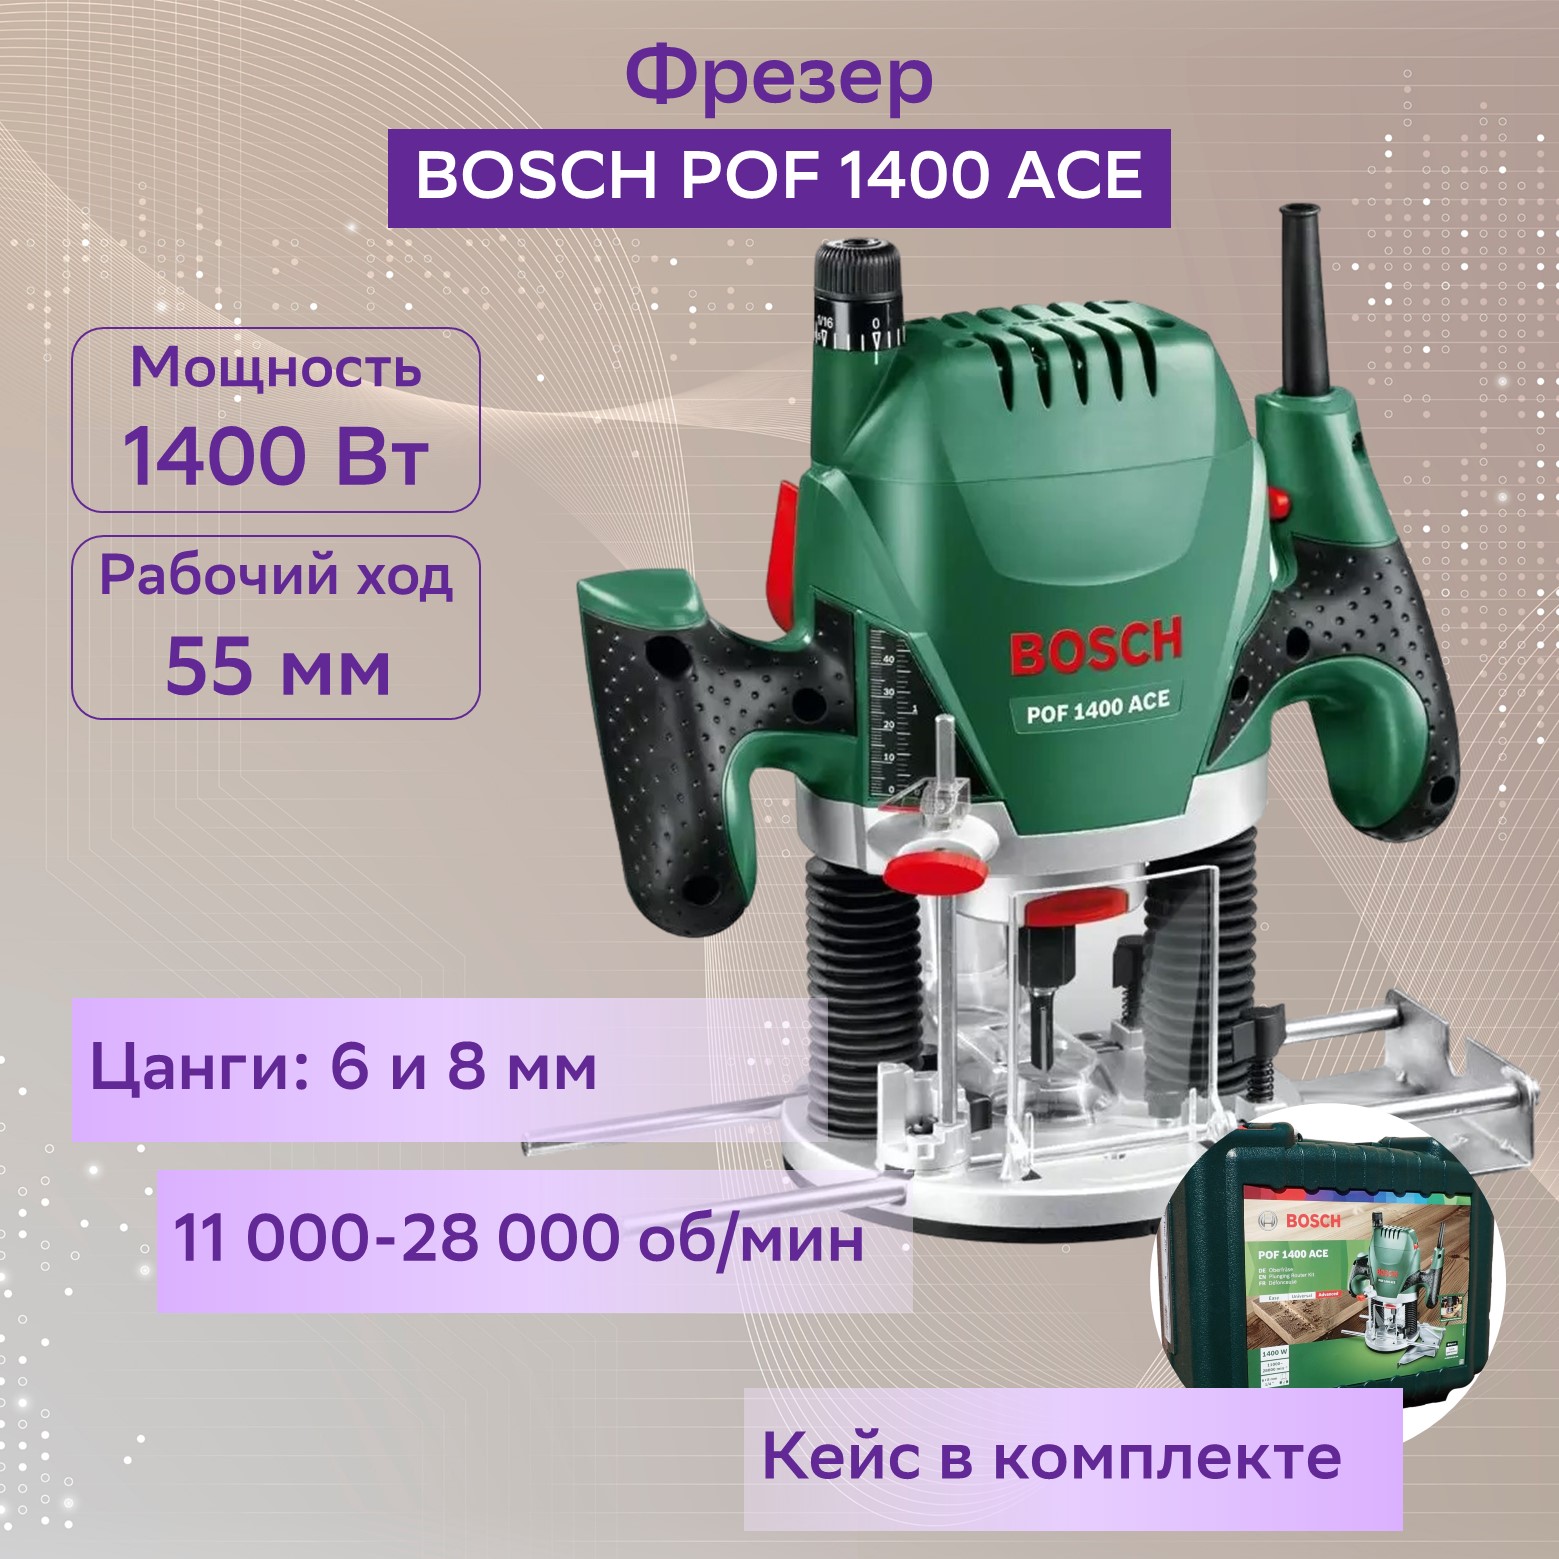 Фрезер бош 1400. Bosch POF 1400 Ace. POF 1400 Ace. Фрейзер бош 1400 профи. Bosch 1400 купить